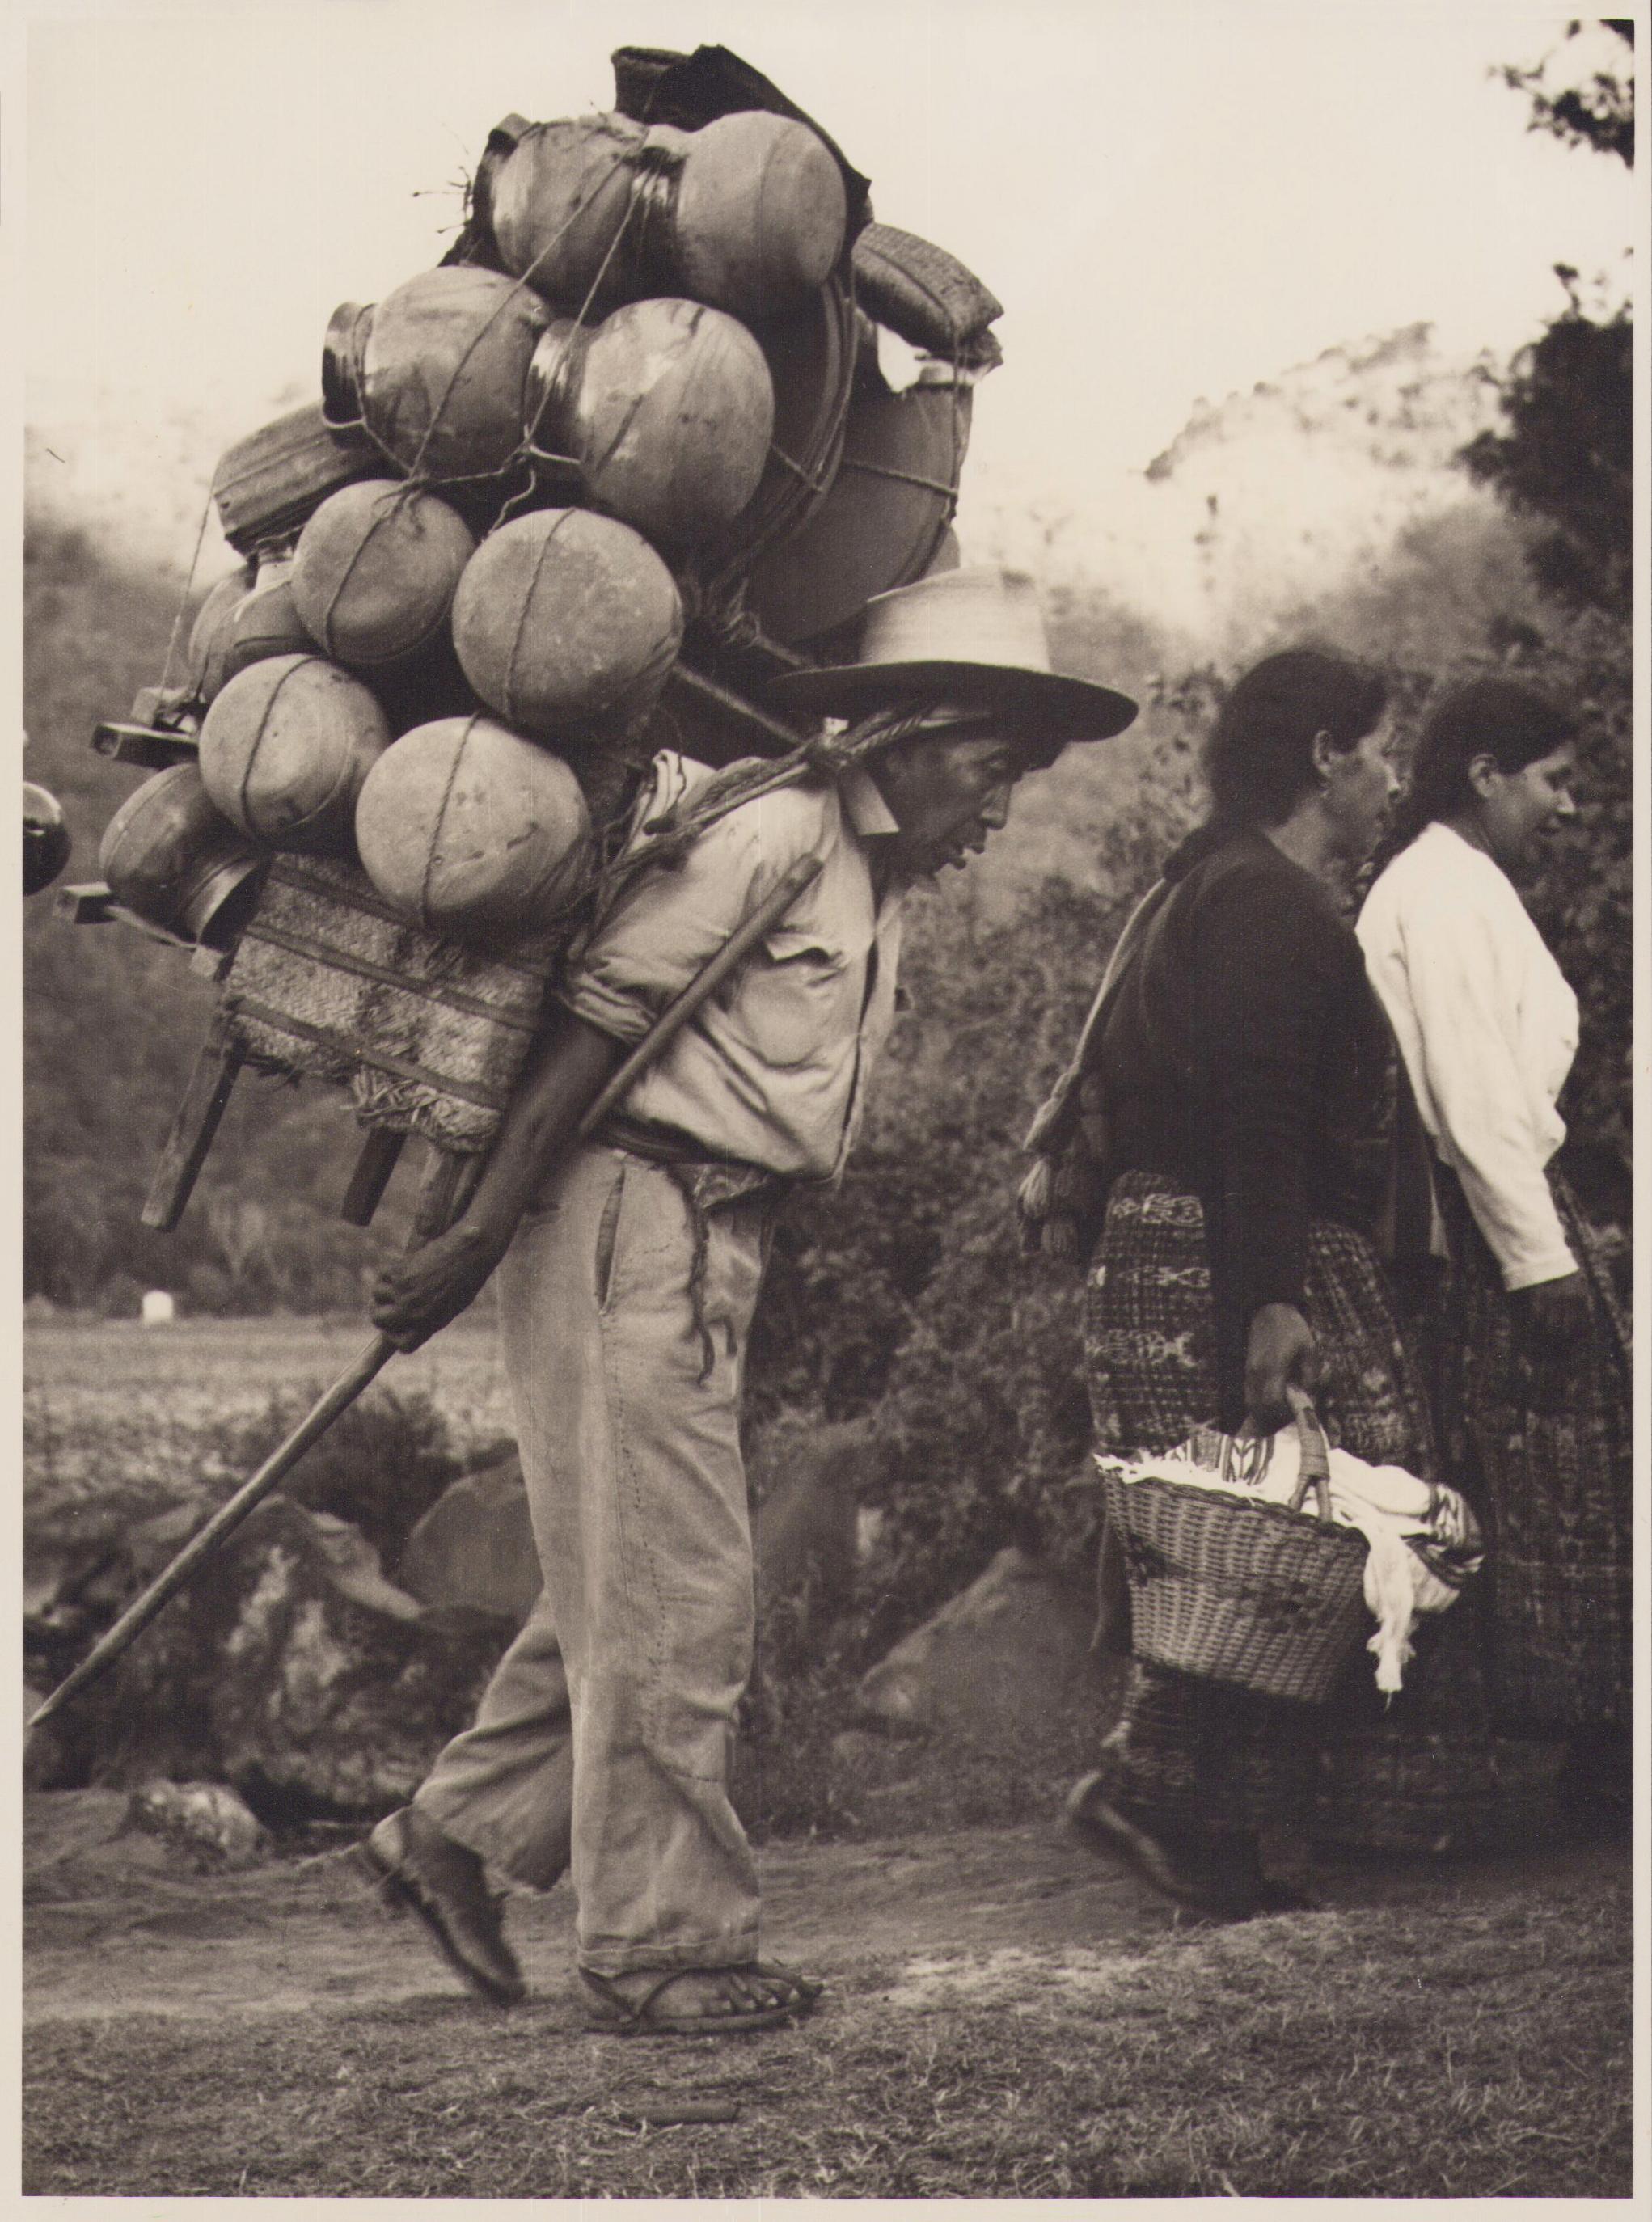 Guatemala, Man, Black and White Photography, ca. 1960s, 25, 3 x 24, 2 cm